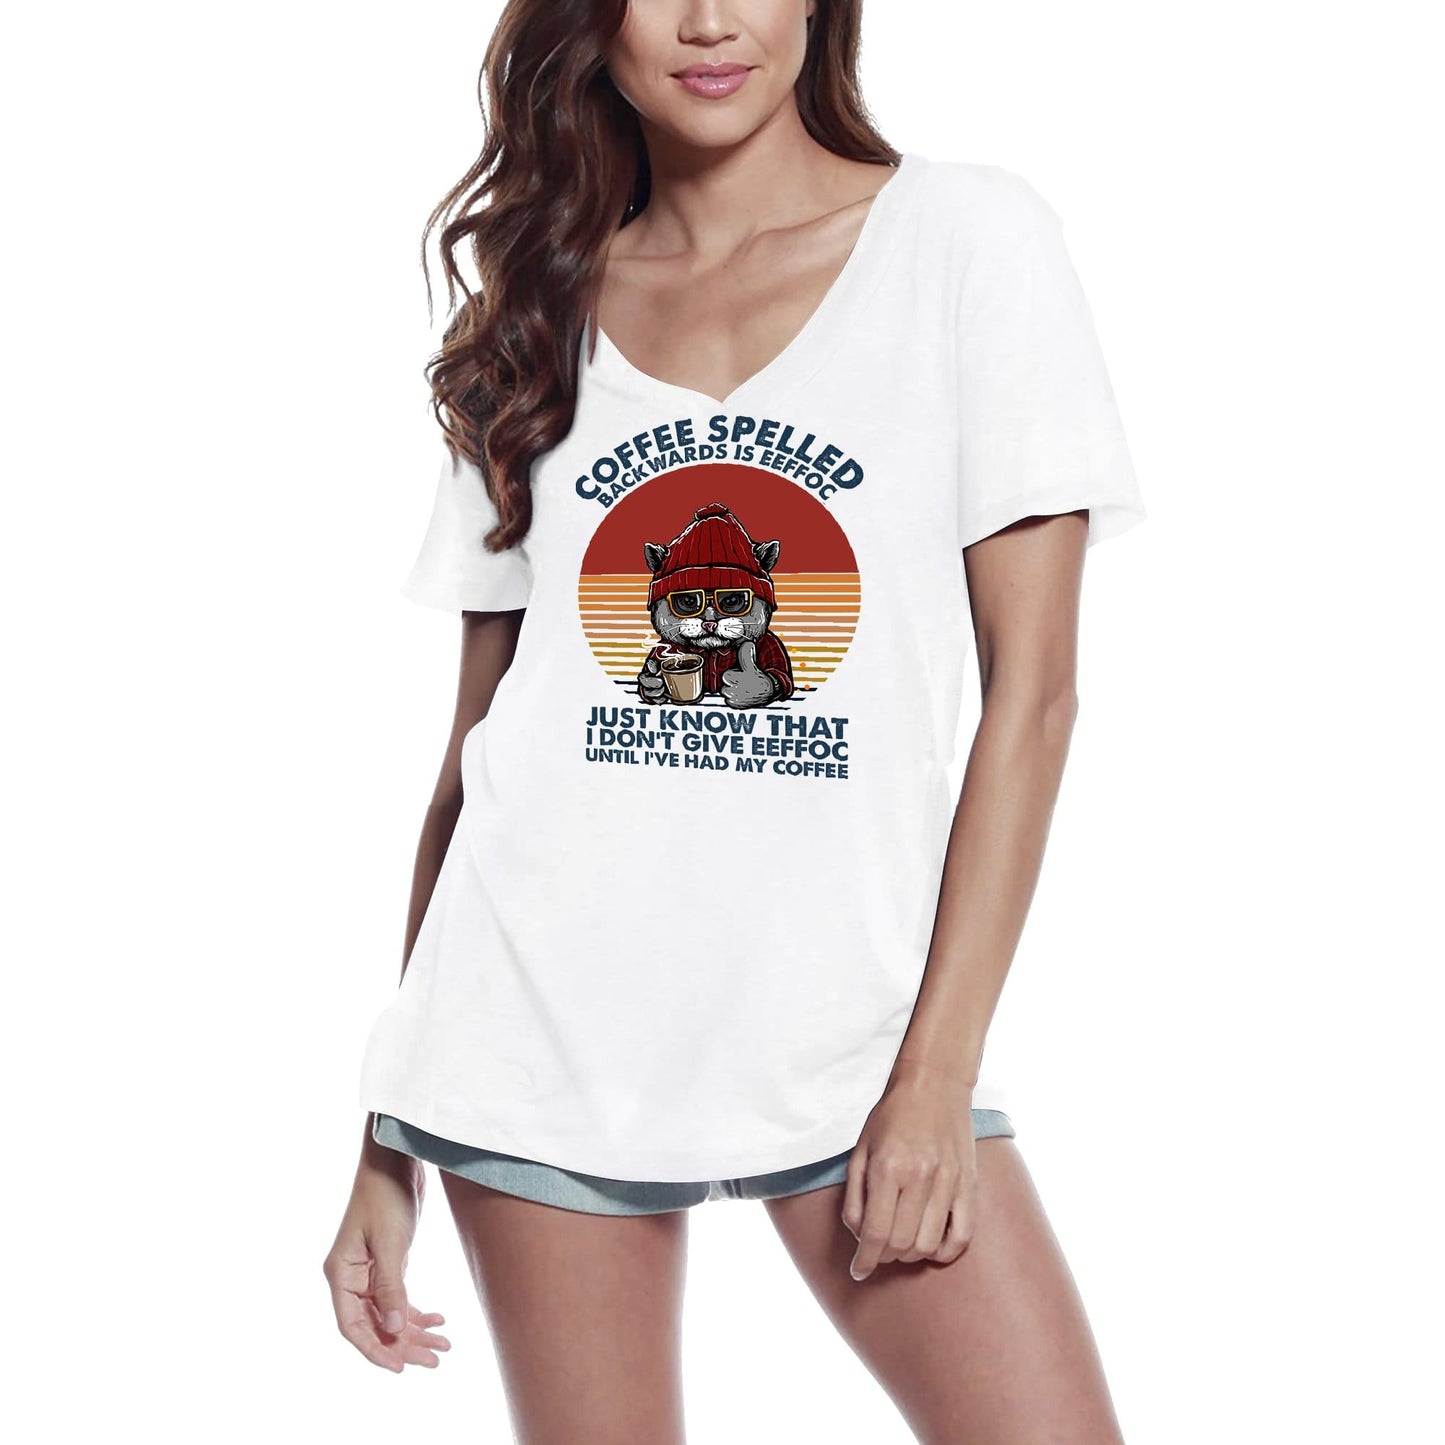 ULTRABASIC Women's T-Shirt Coffee Spelled Backwards is Eeffoc - Funny Humor Cat Tee Shirt